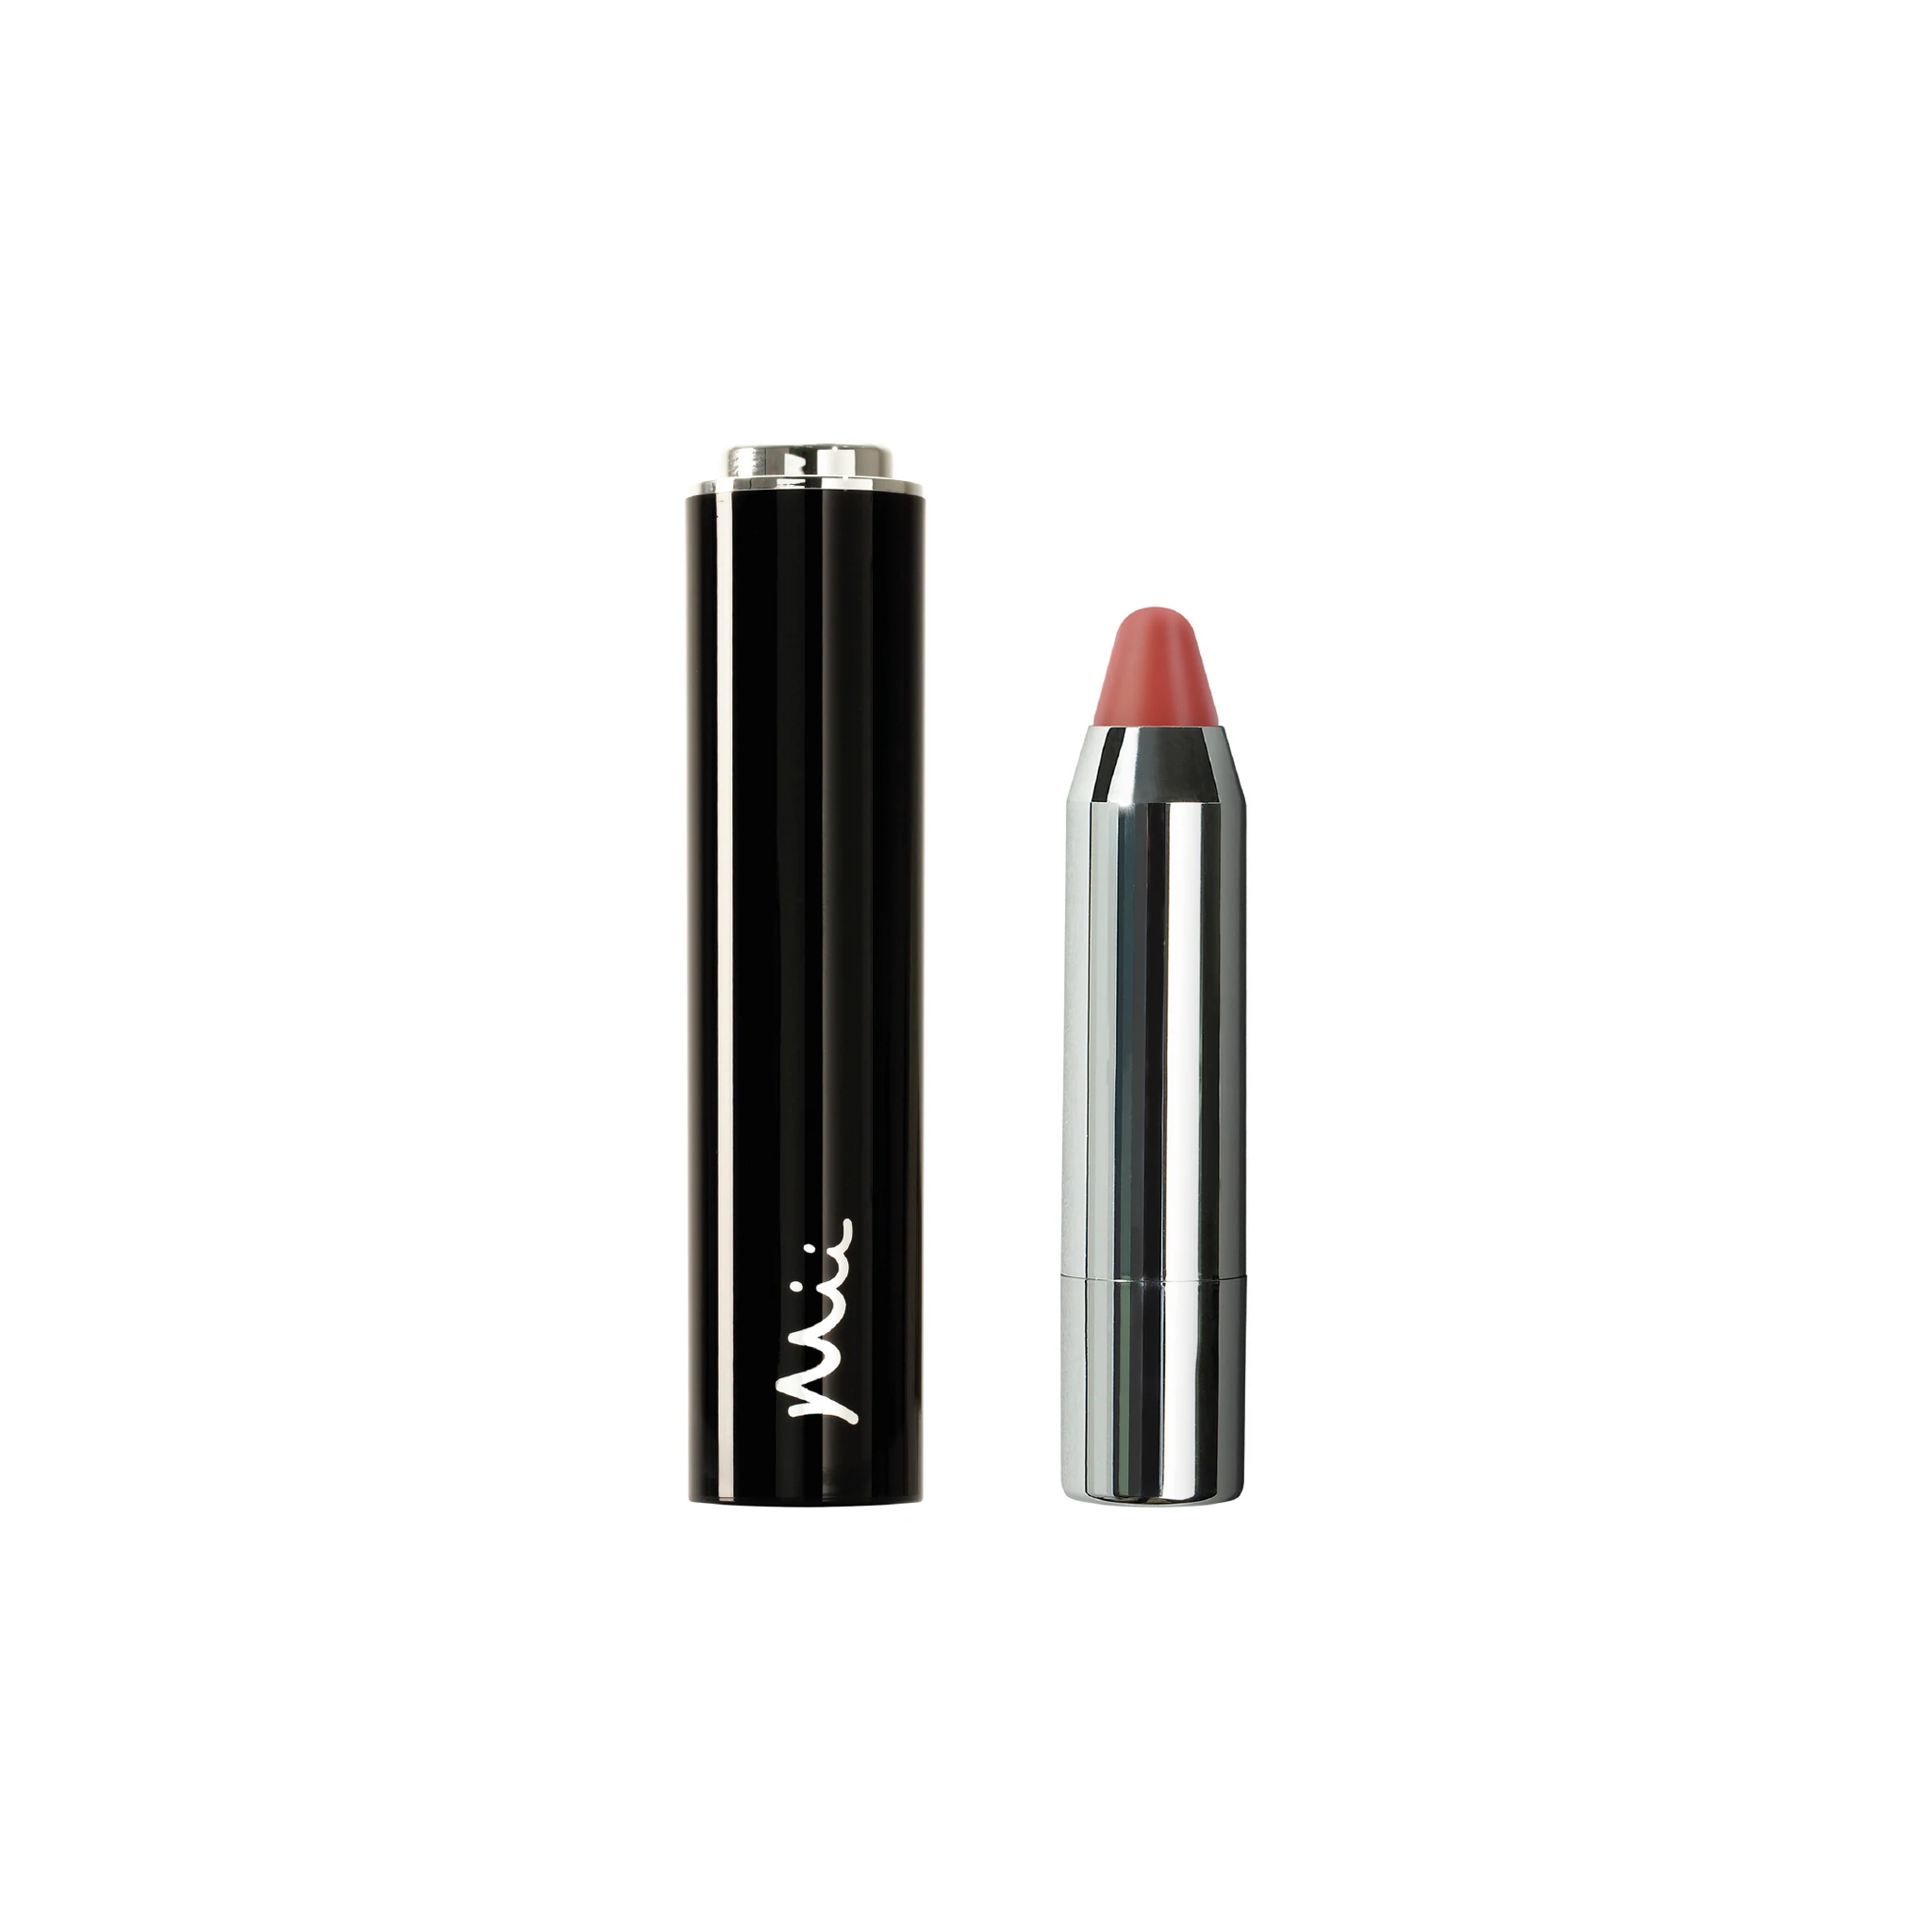 Click & Colour Lip Crayon - cognac 04 - NEW - 15g - Rekkem